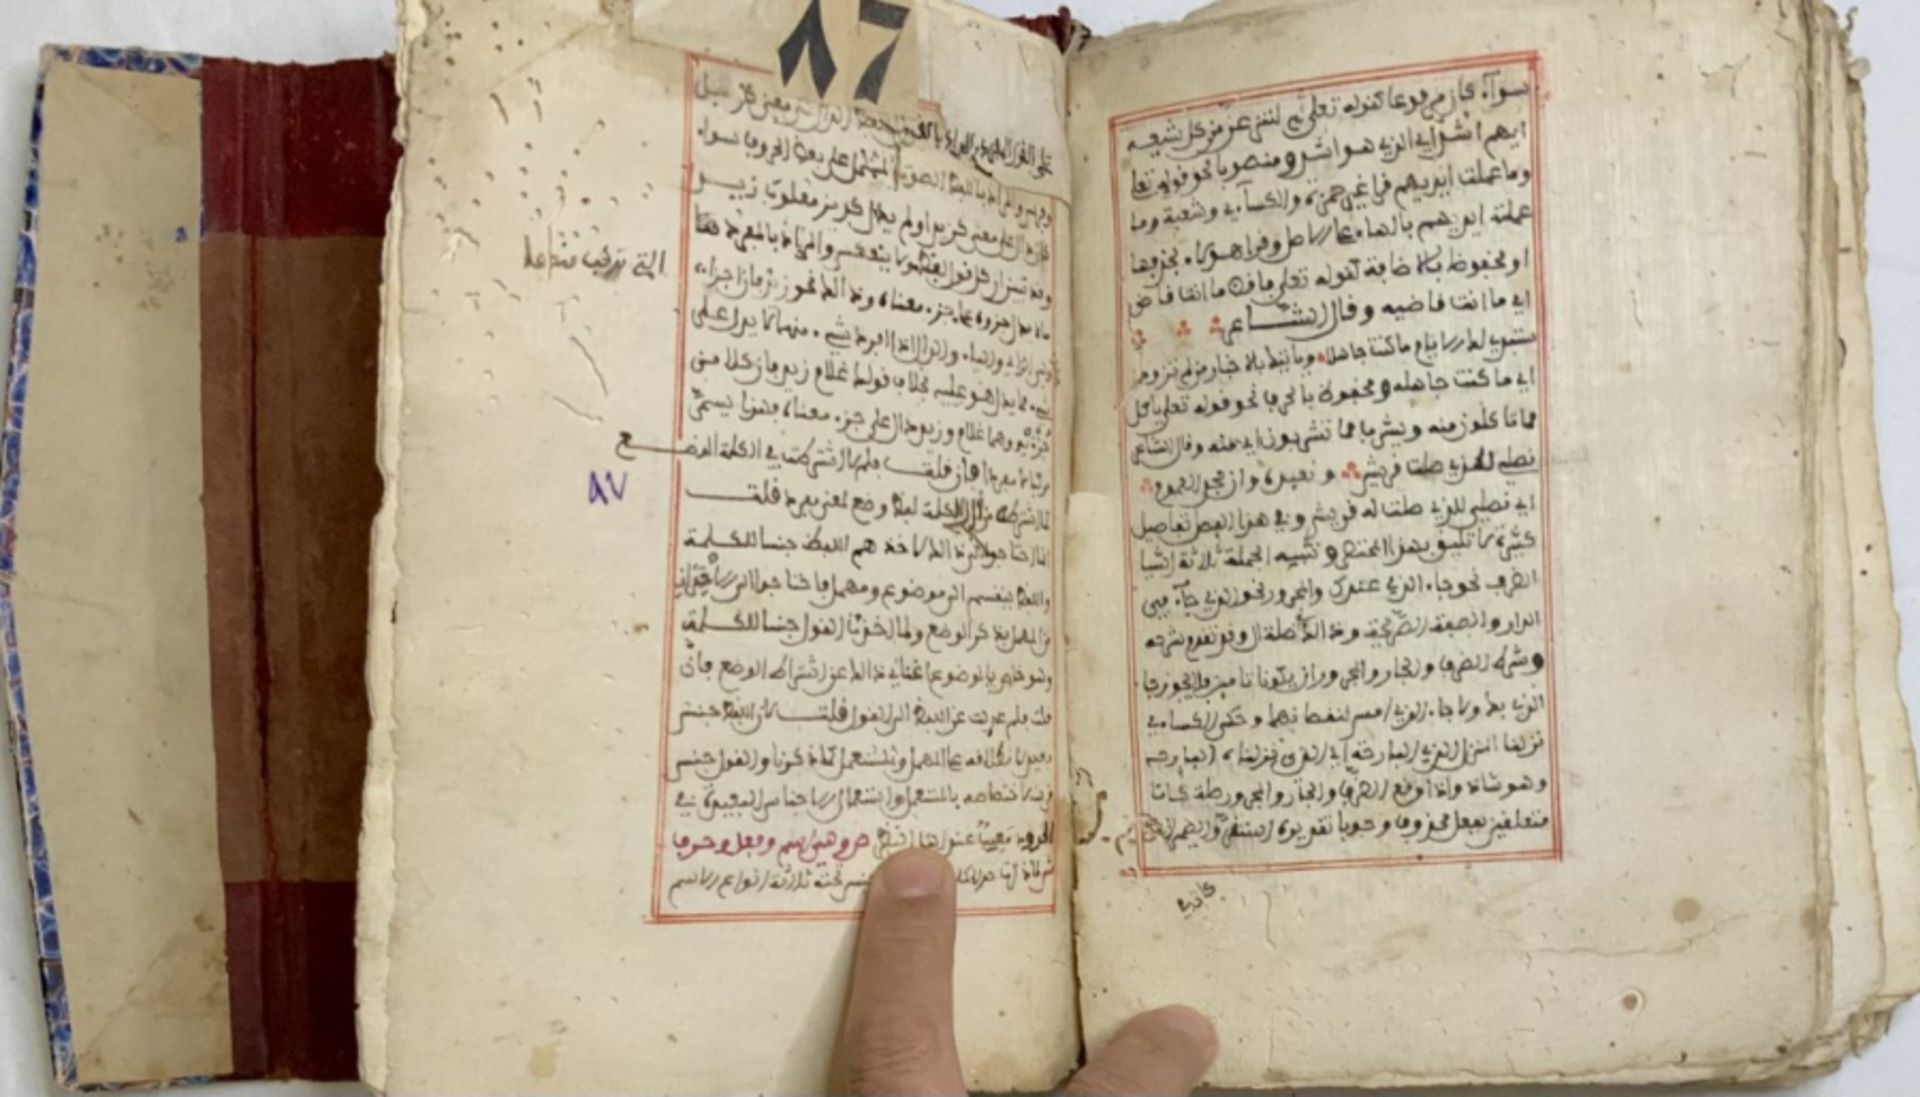 18th century Islamic manuscript on morphology and rhetoric - Image 13 of 18